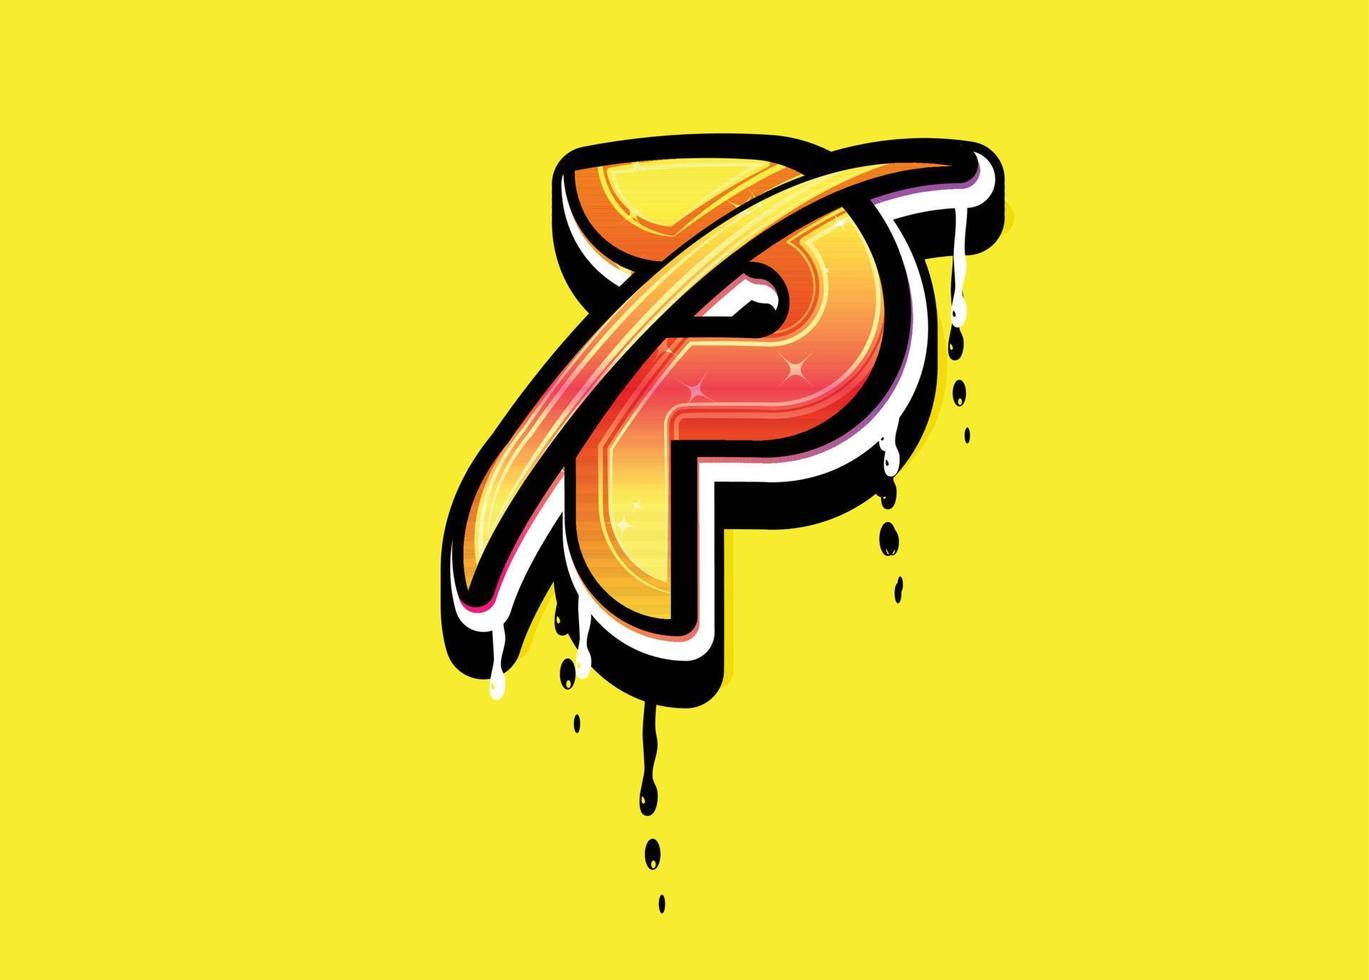 p lettera swoosh logo vettoriale